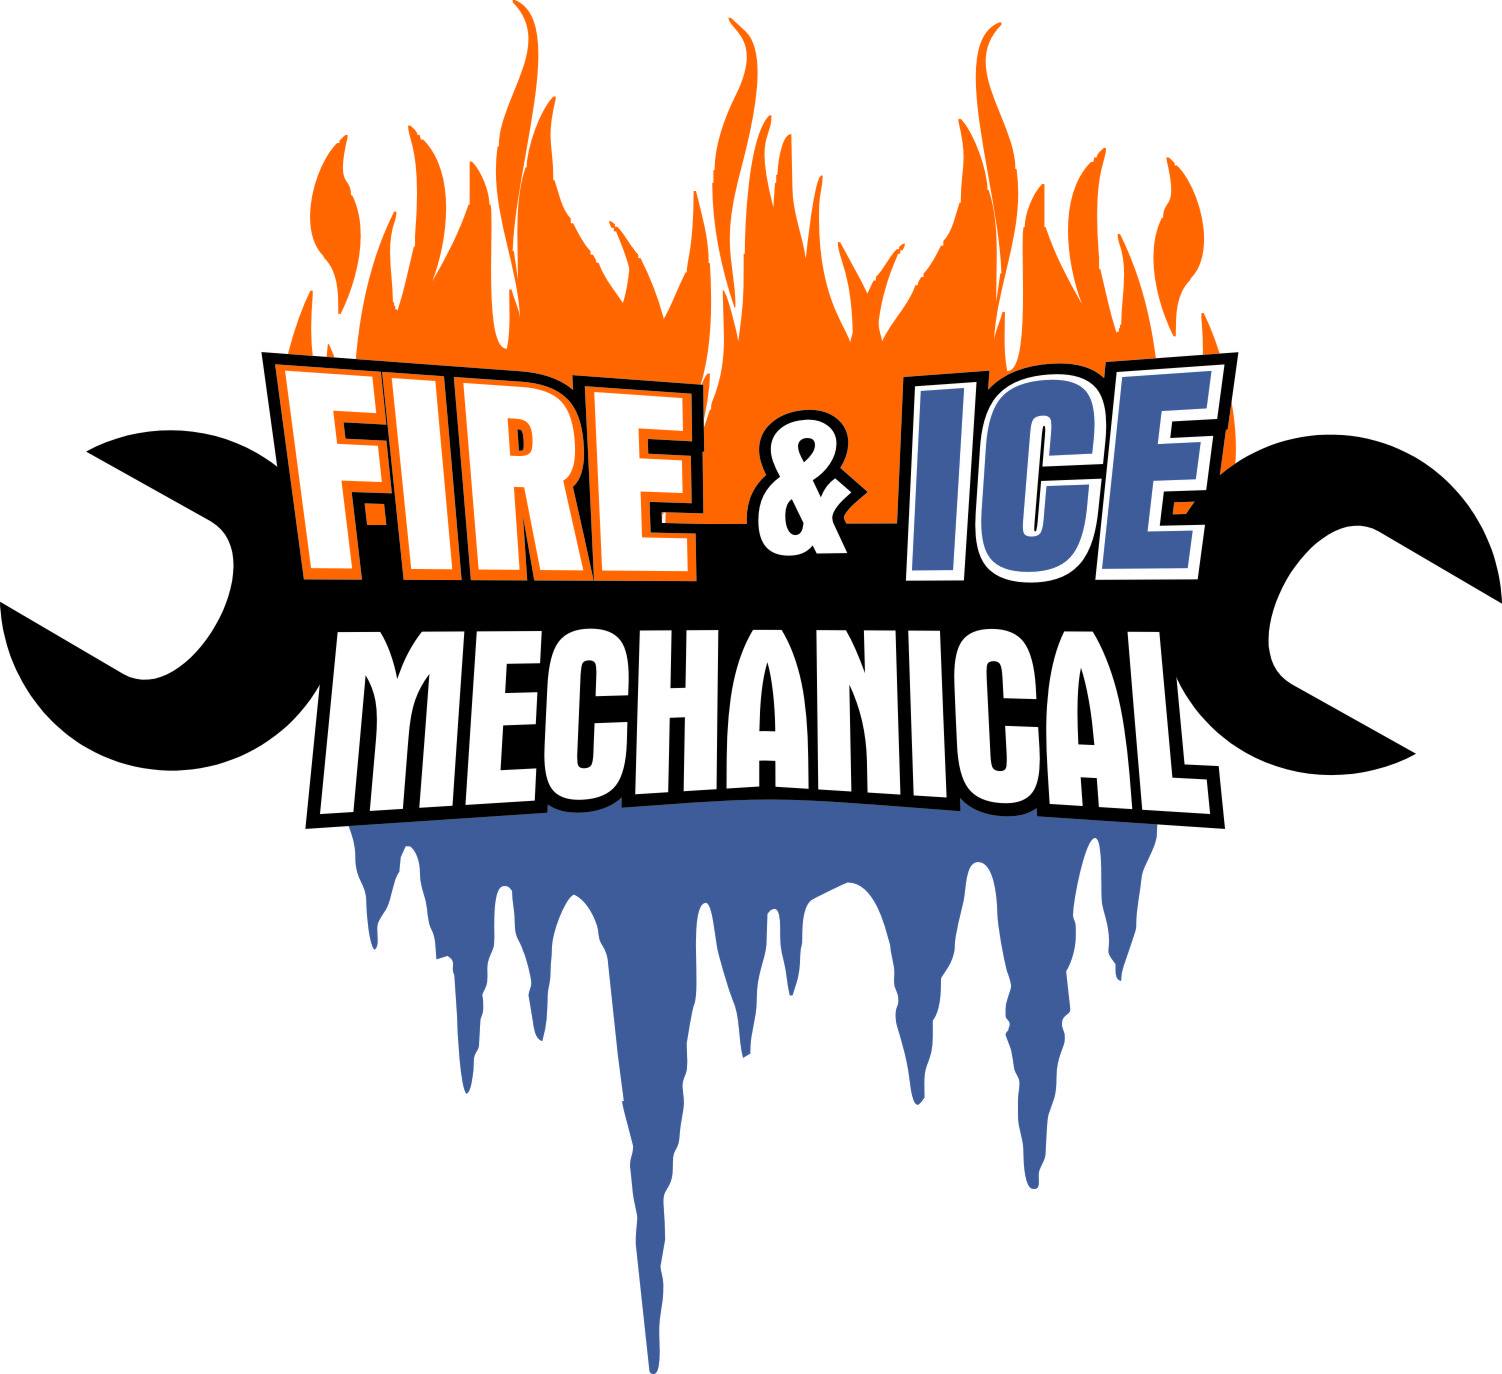 Fire and Ice Mechanical 6060 US-20, Chadron Nebraska 69337